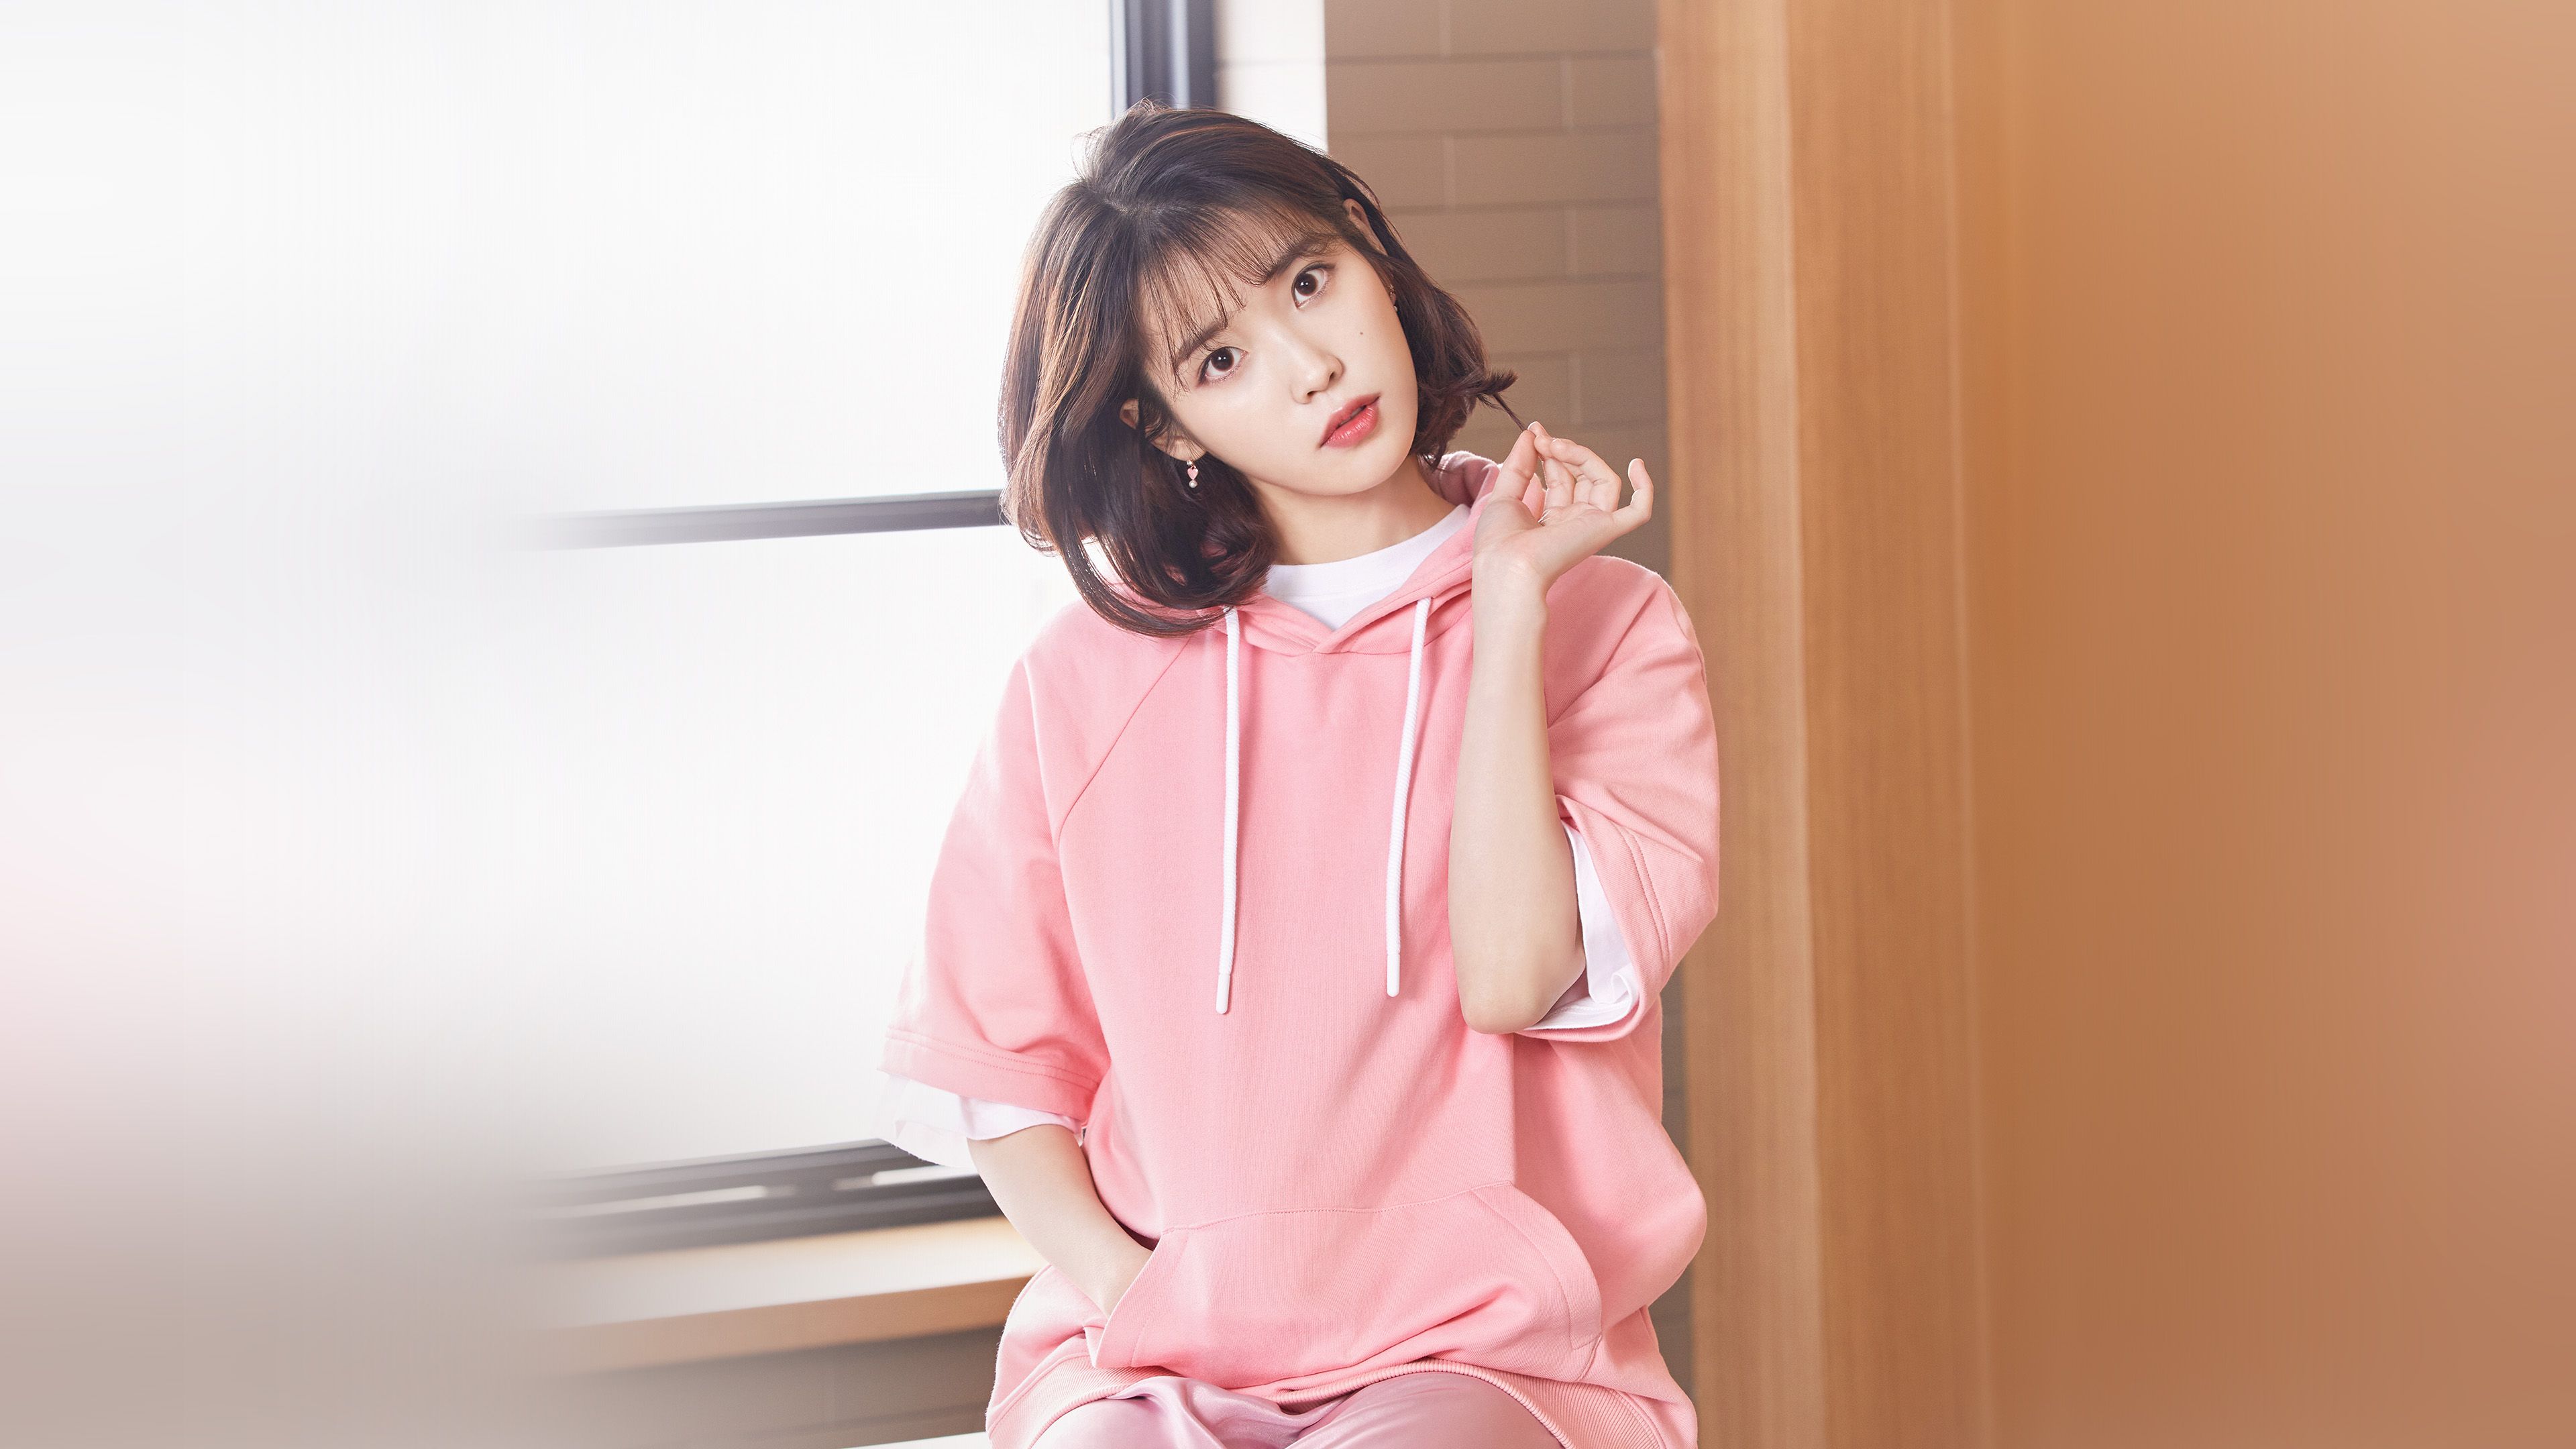 Iu Girl Pink Kpop Singer Asian Celebrity Music Wallpaper